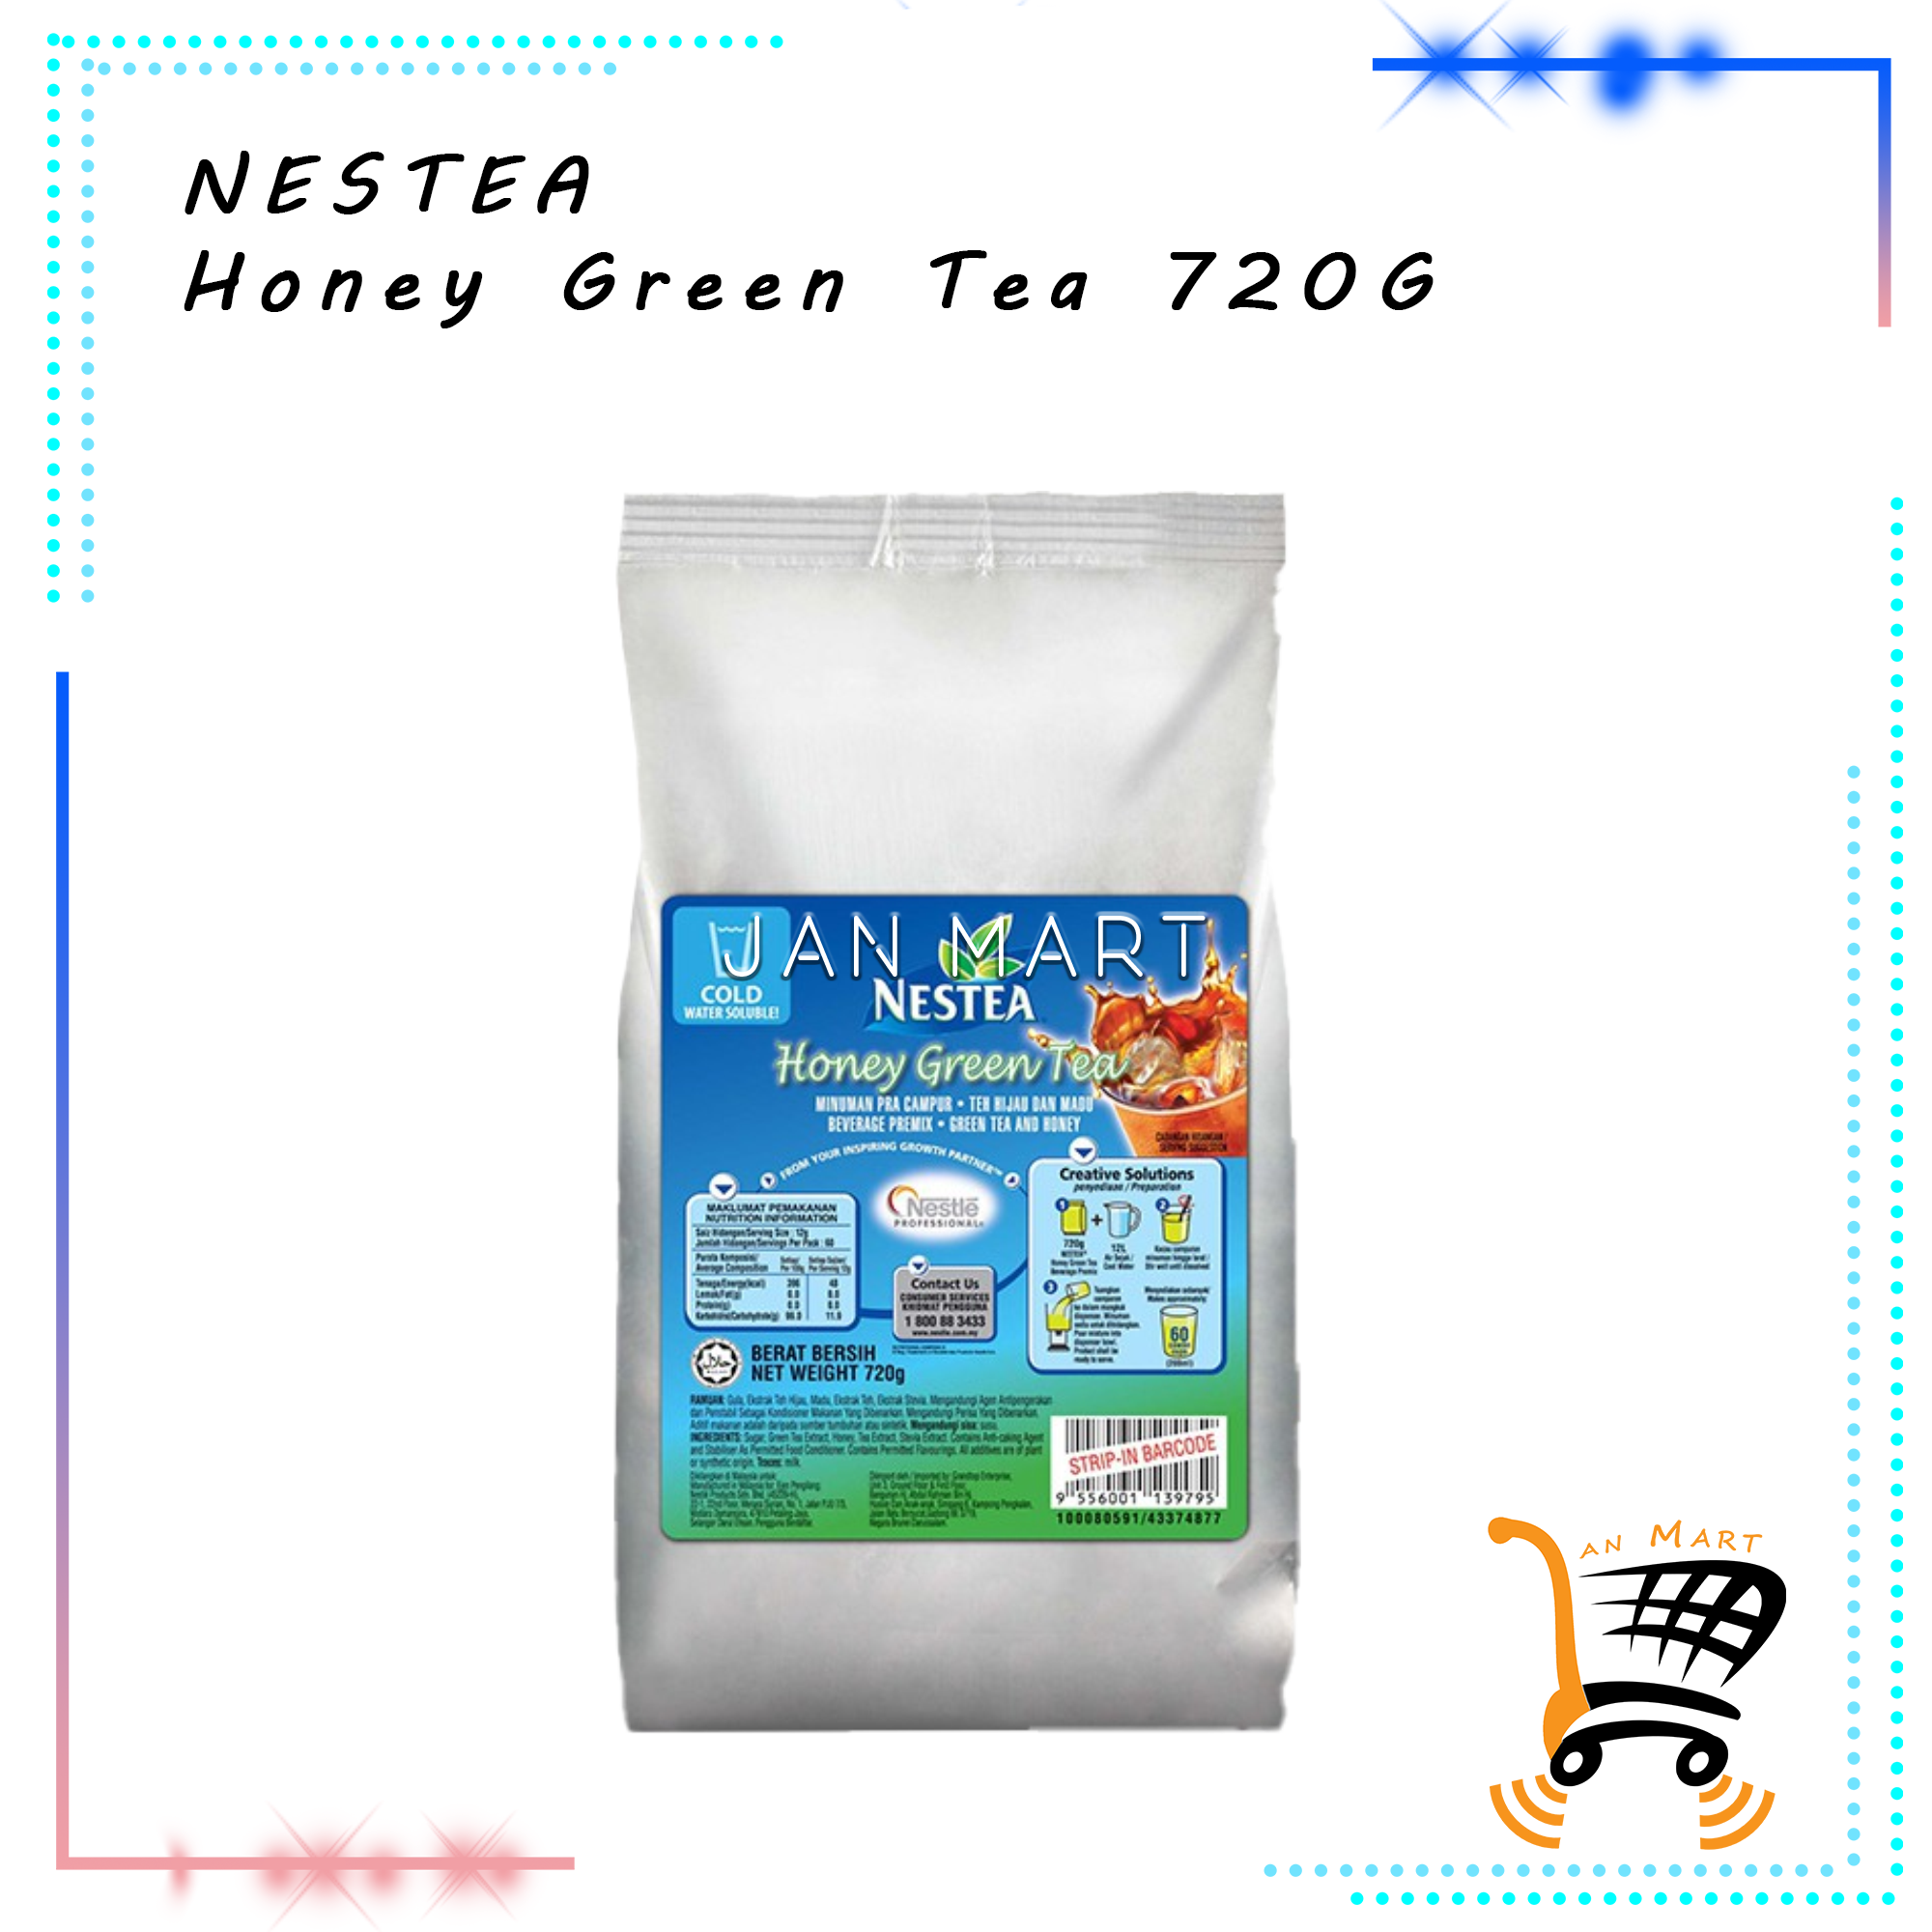 NESTEA Honey Green Tea 720G